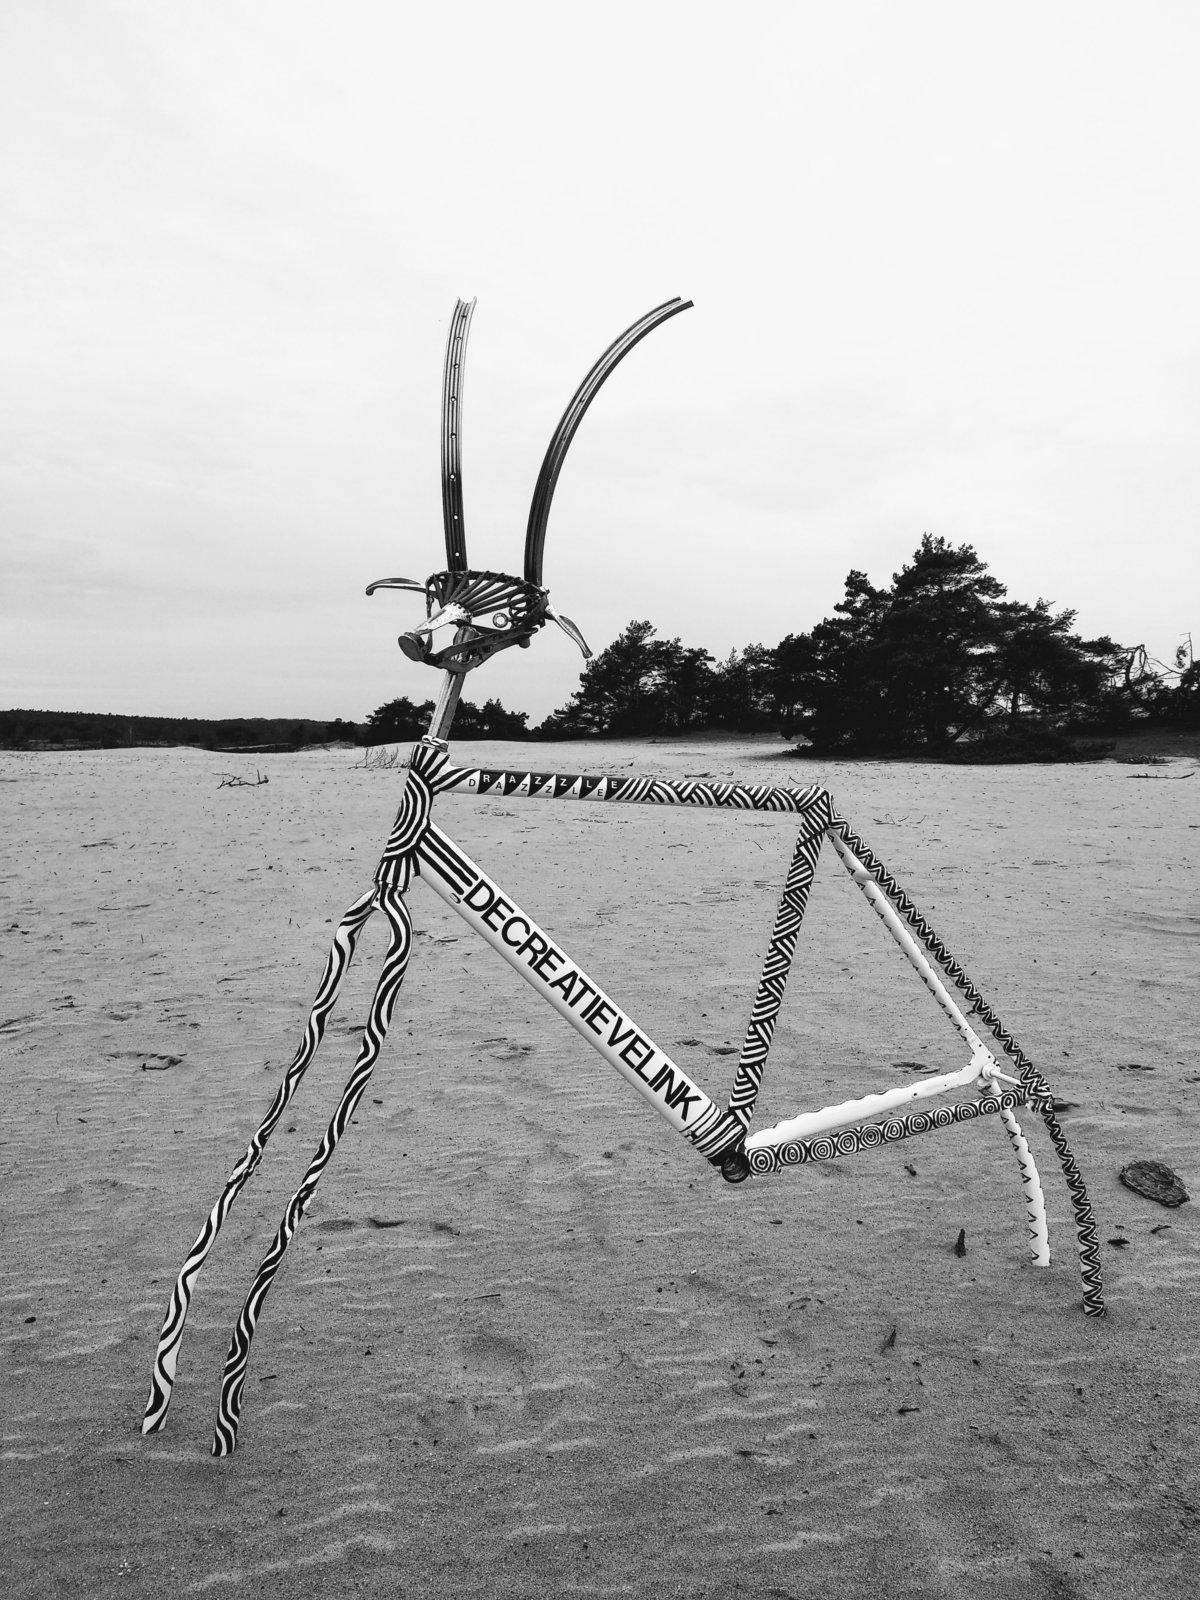 Animalized Razzle Dazzle Bicycle Art Fietskunst Decreatievelink